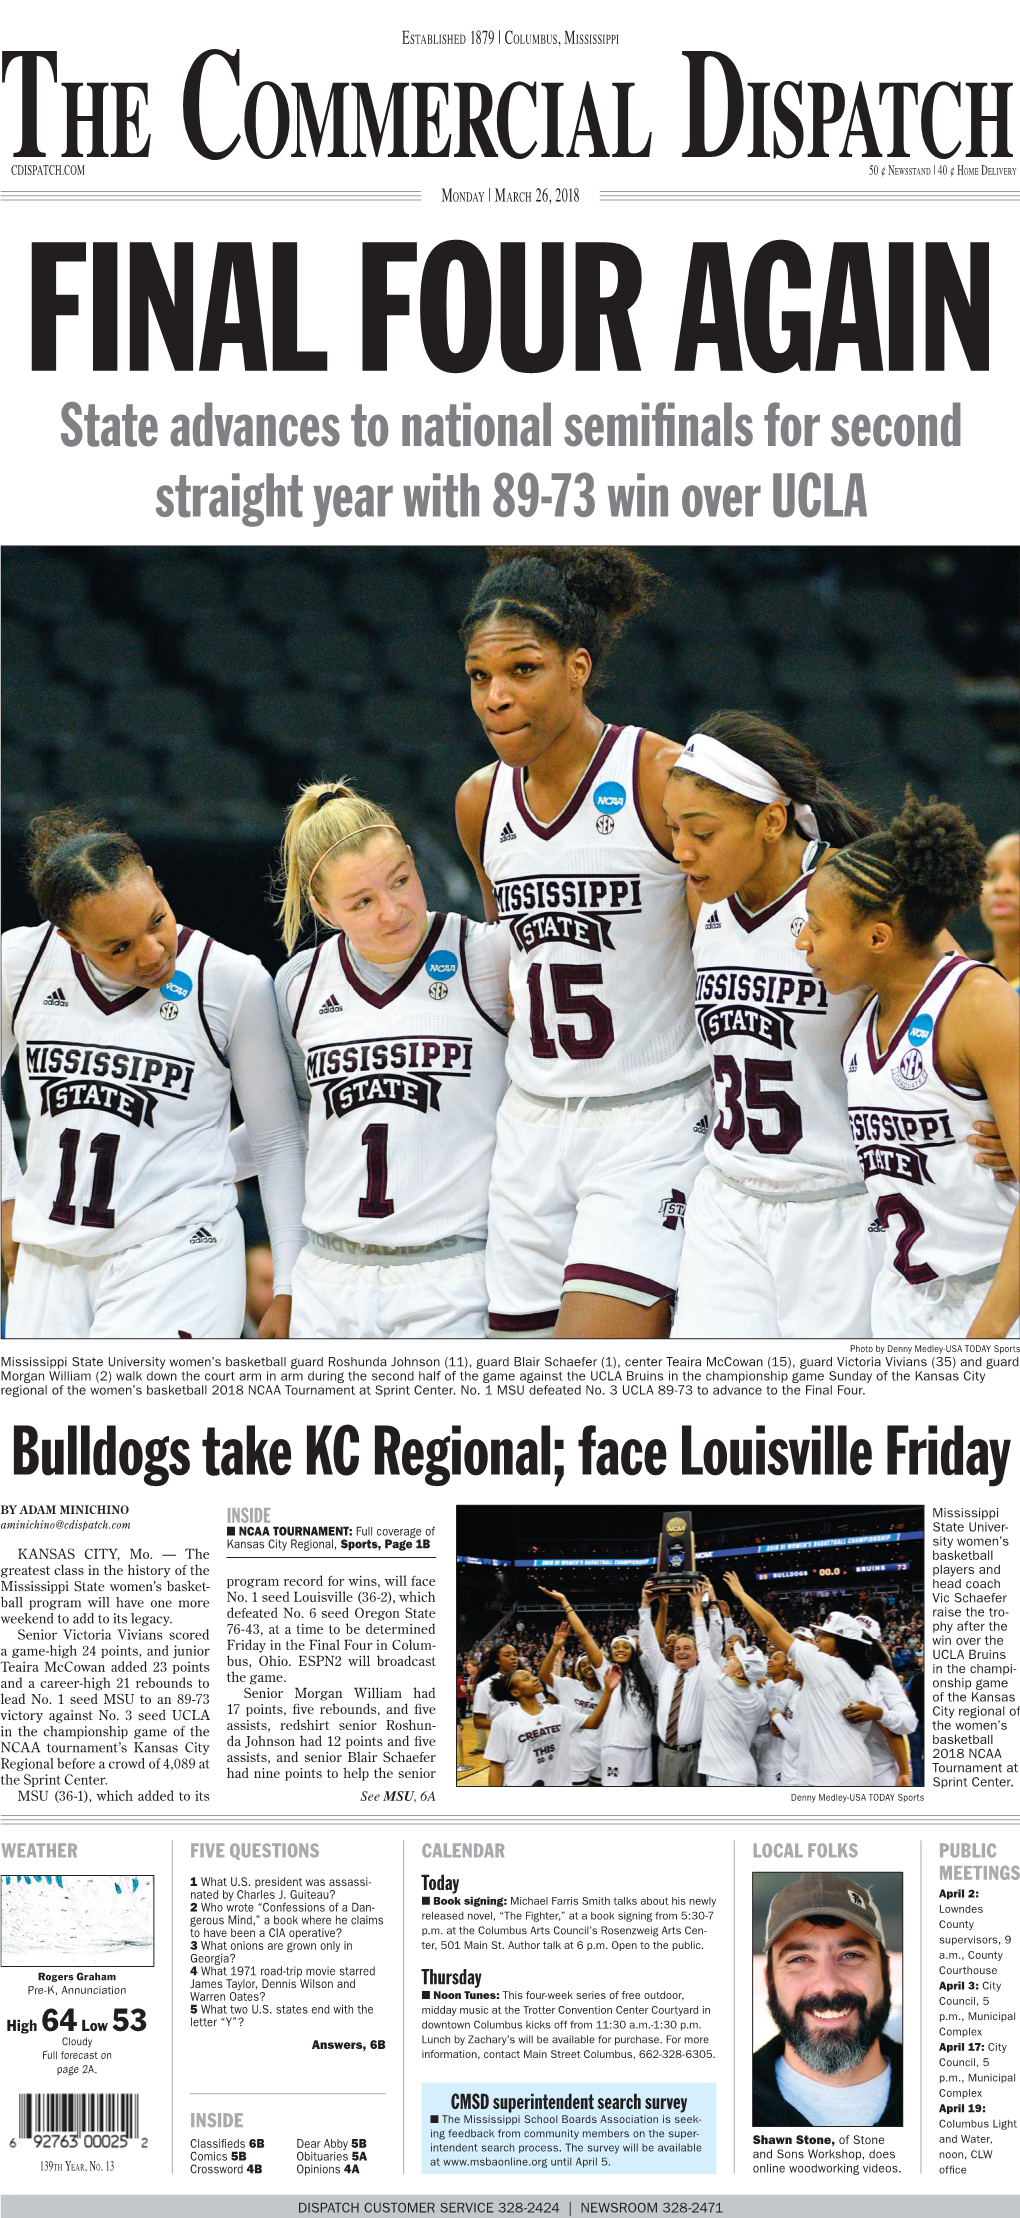 Bulldogs Take KC Regional; Face Louisville Friday